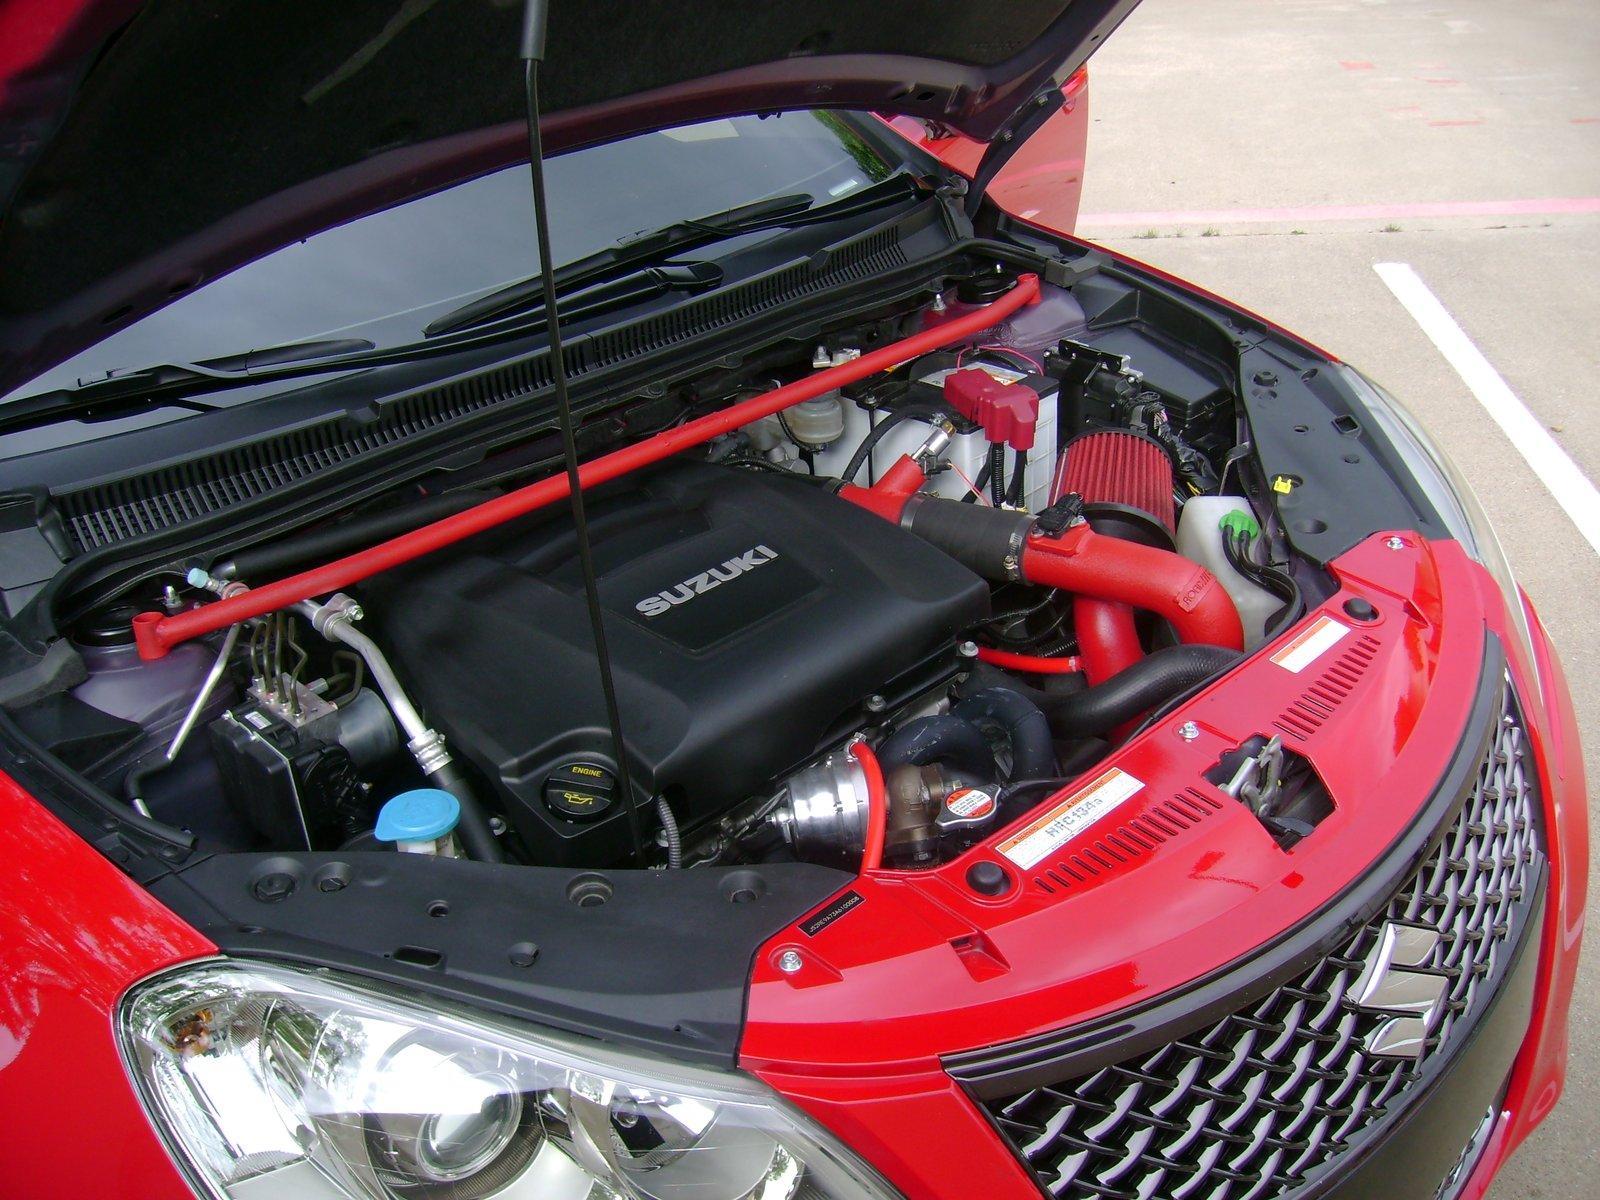 Motorul turbo dezvolta 290 CP